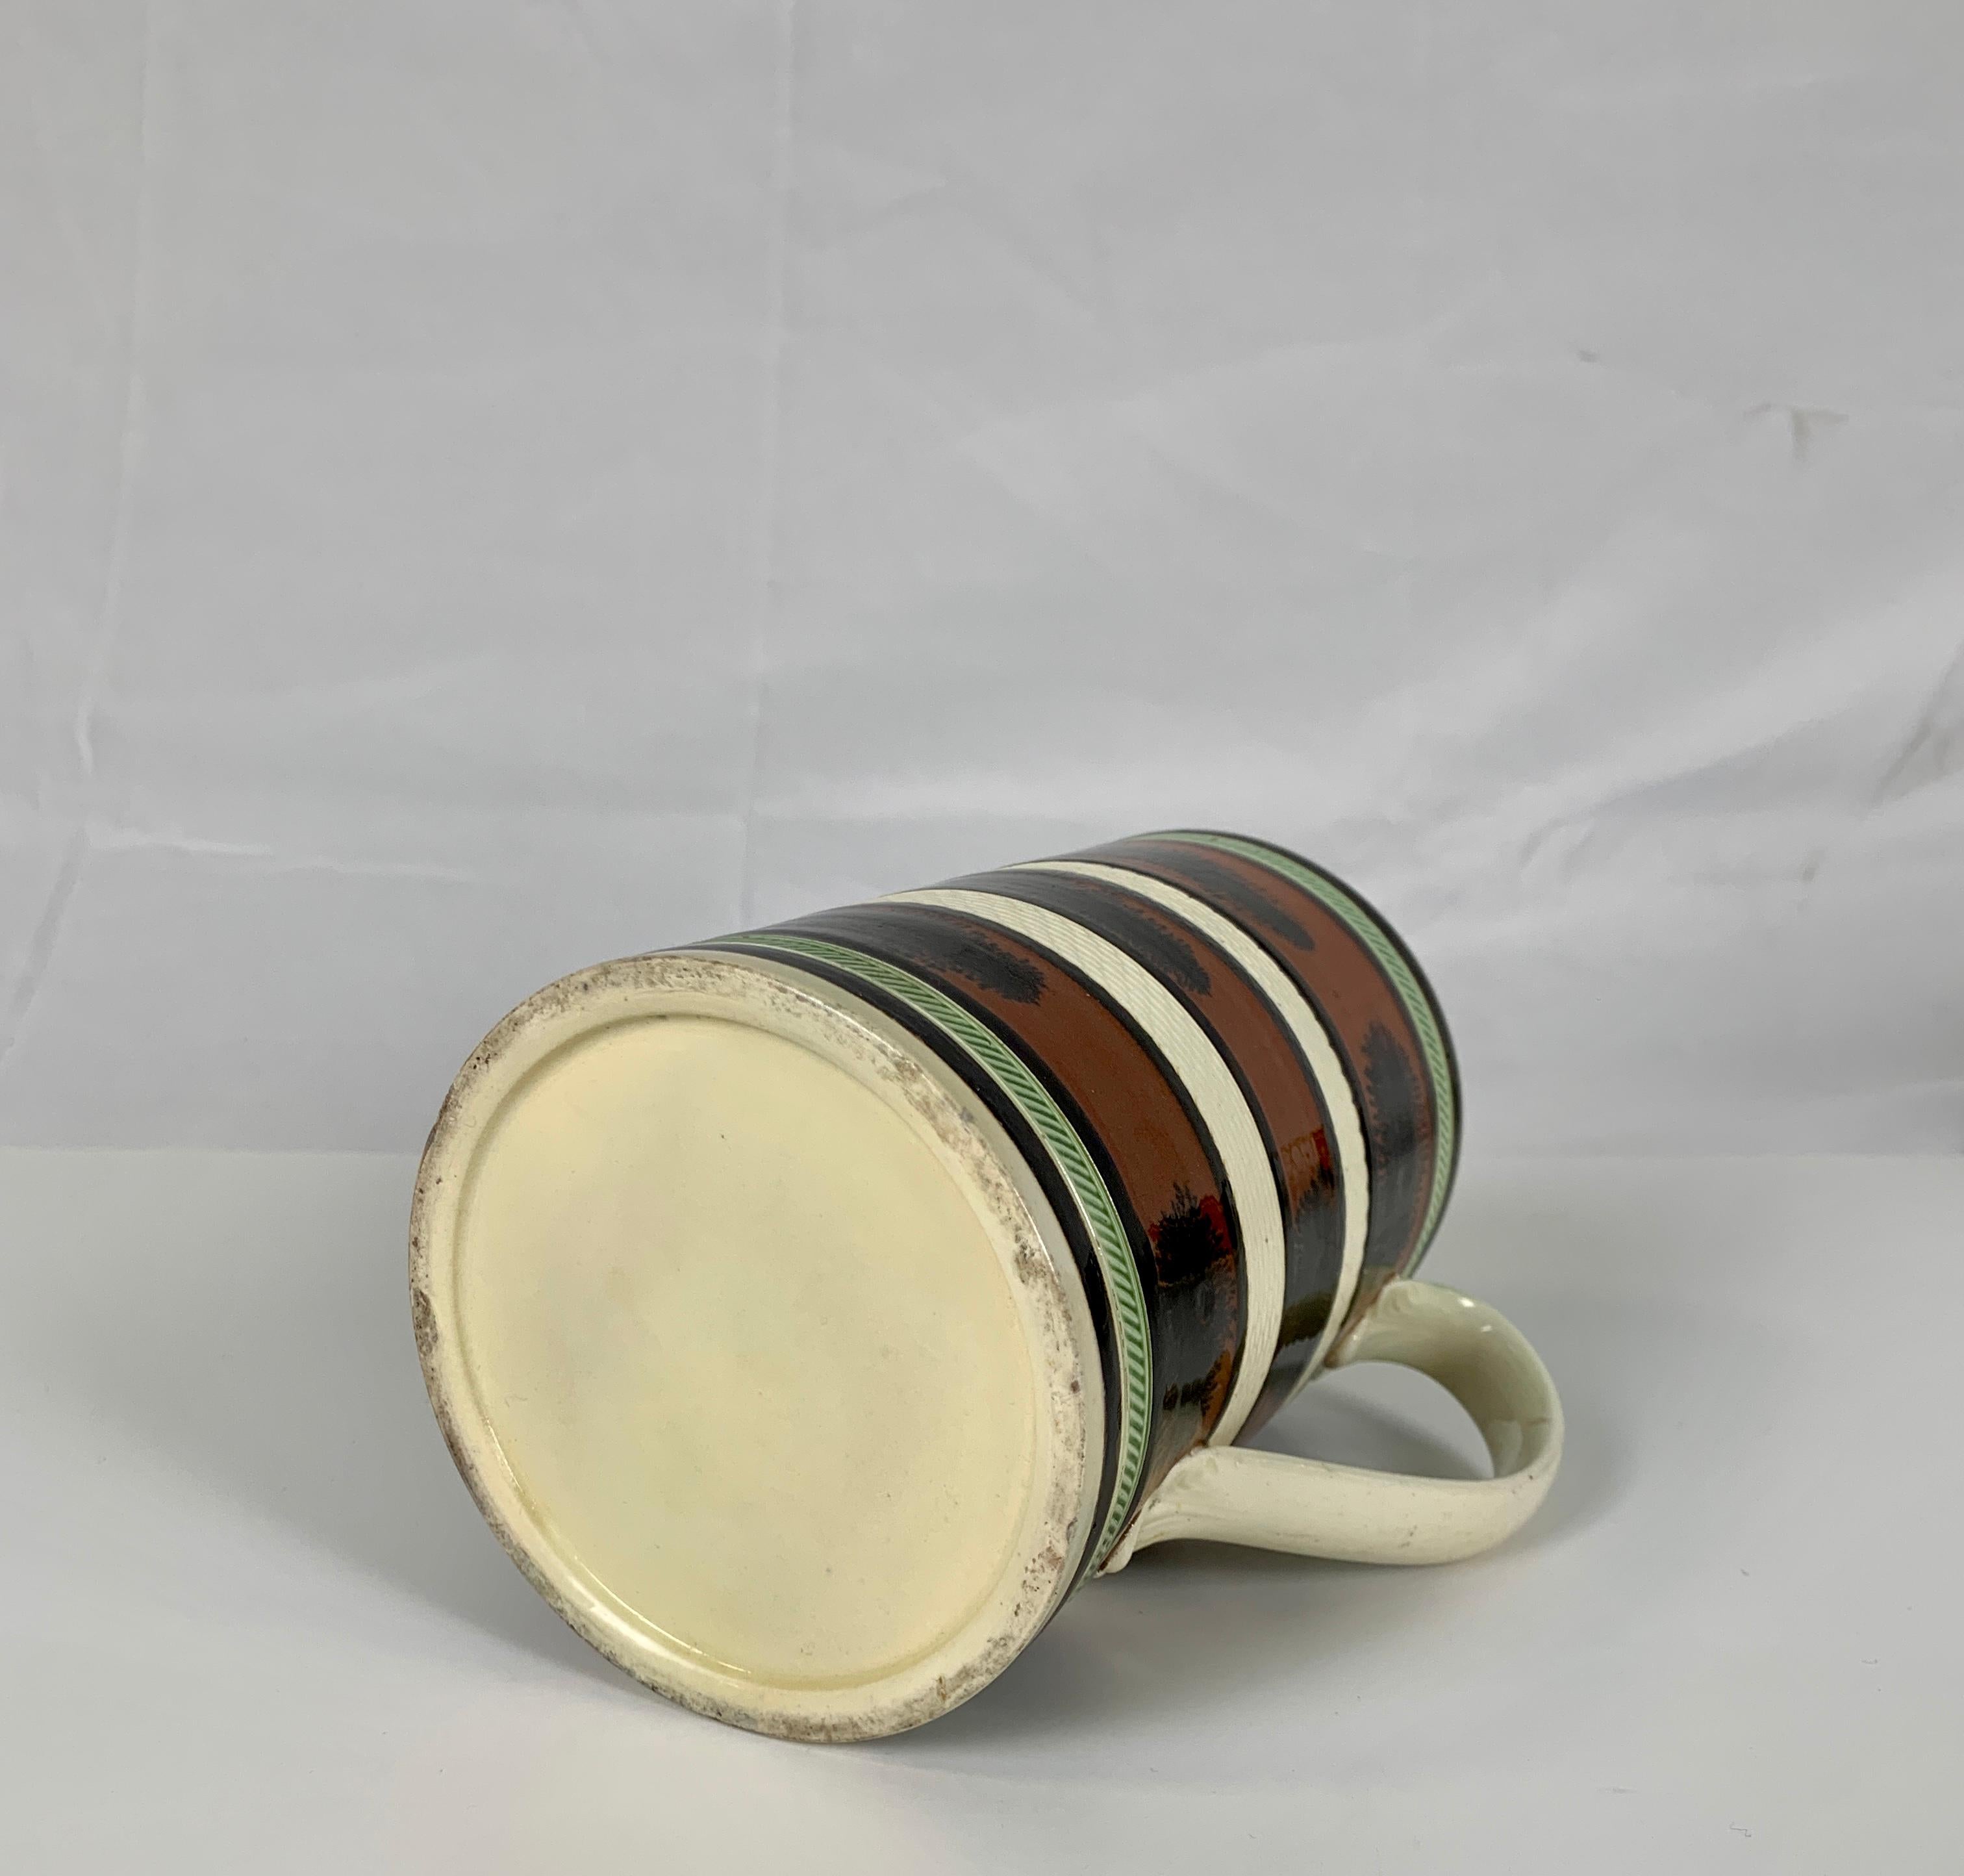  Mochaware Creamware Mug Made in England circa 1800 Decorated with 